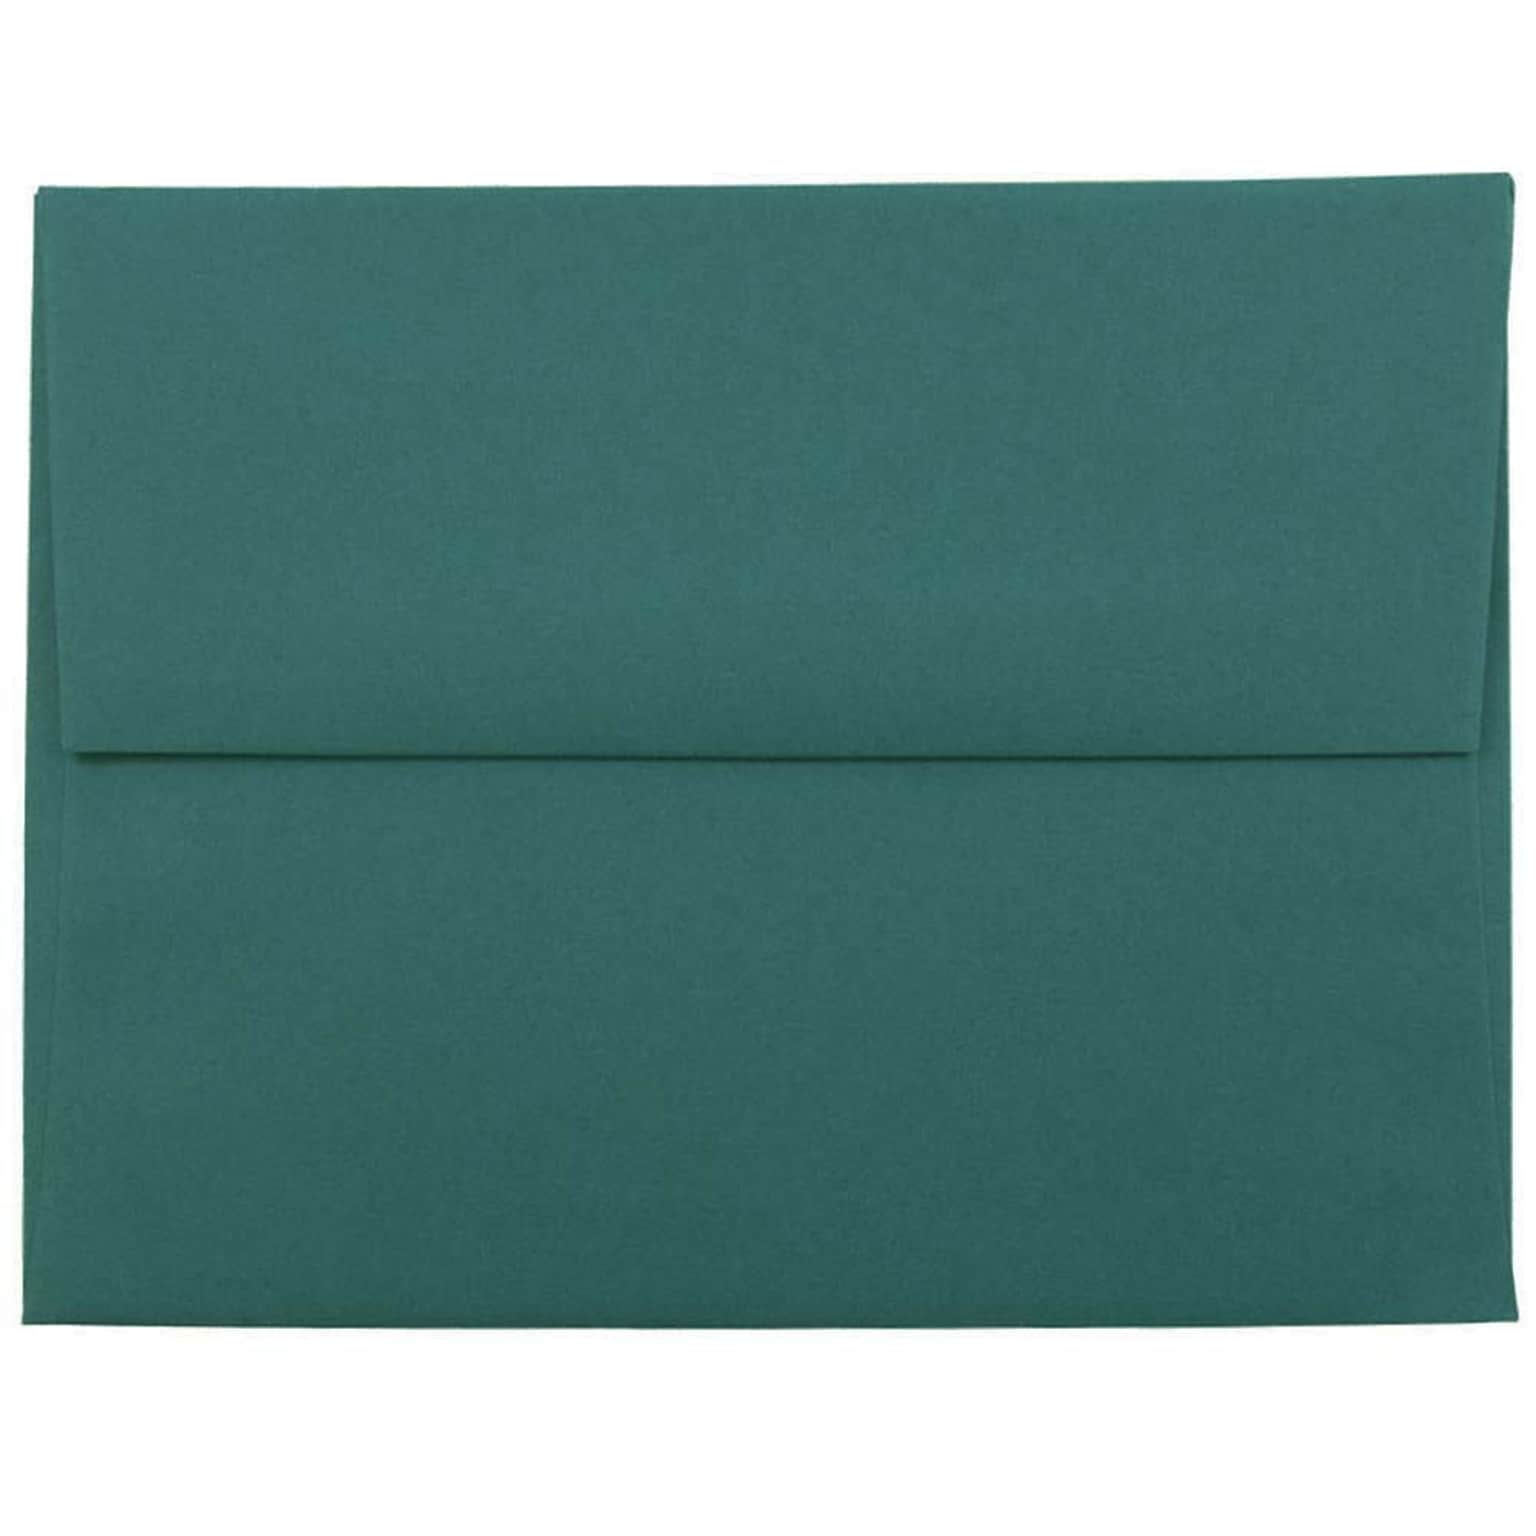 JAM Paper A2 Invitation Envelopes, 4.375 x 5.75, Teal, 25/Pack (124823544)